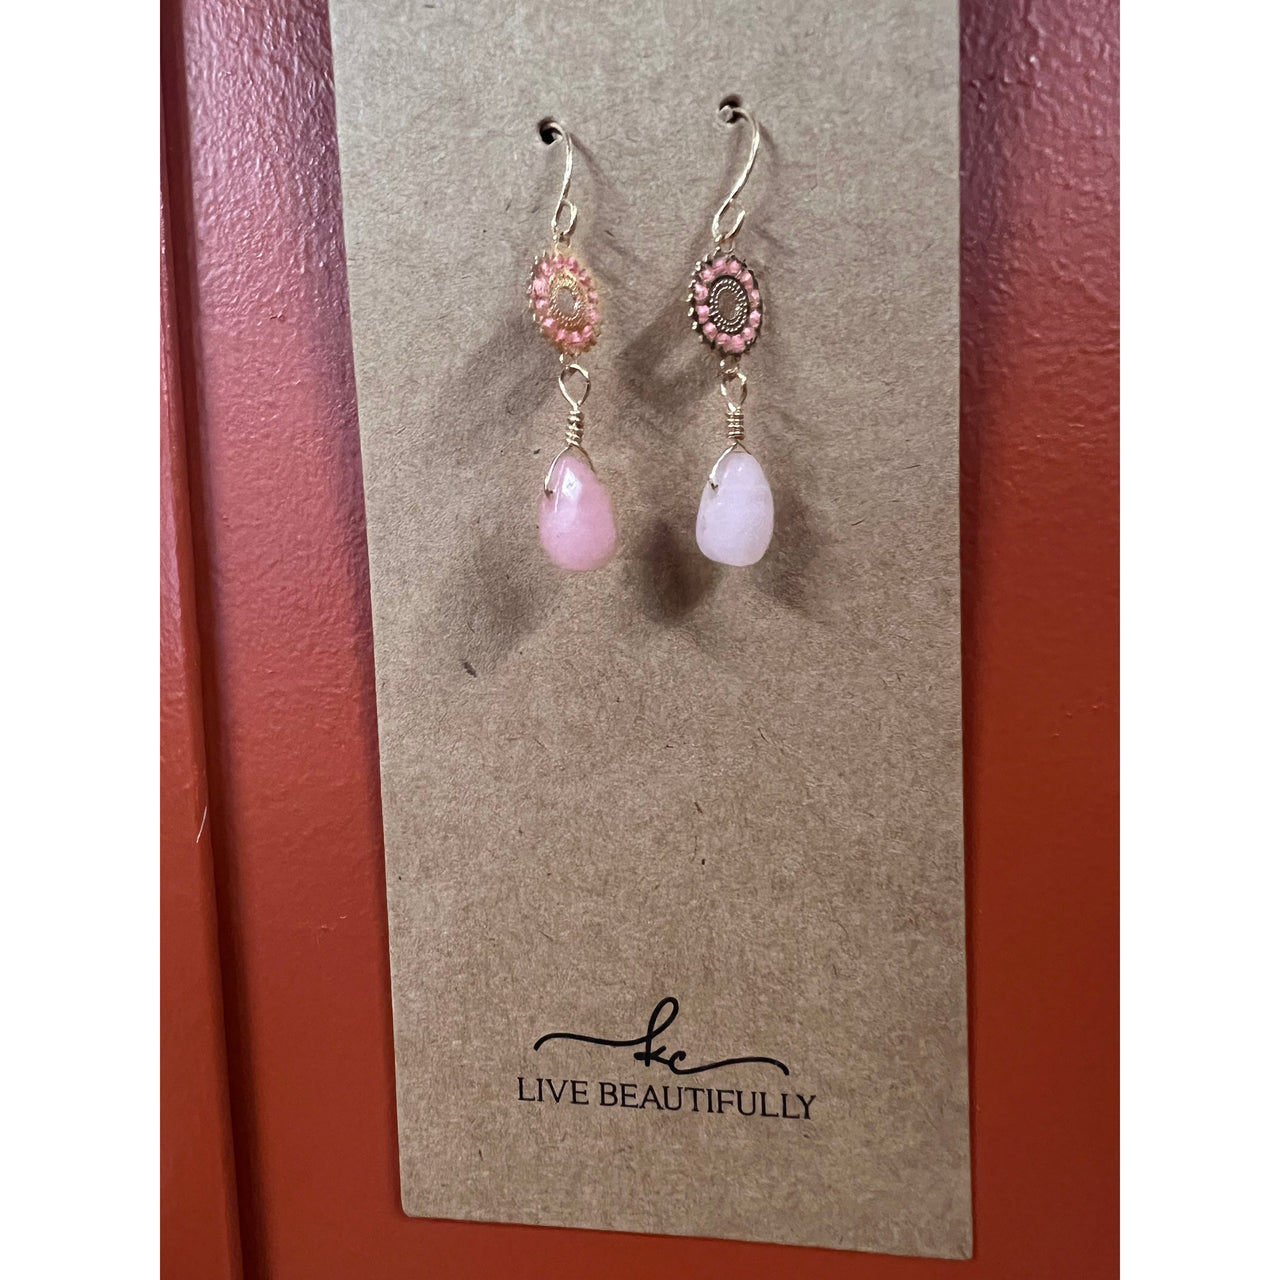 Live Beautifully Earrings - Drop Pink